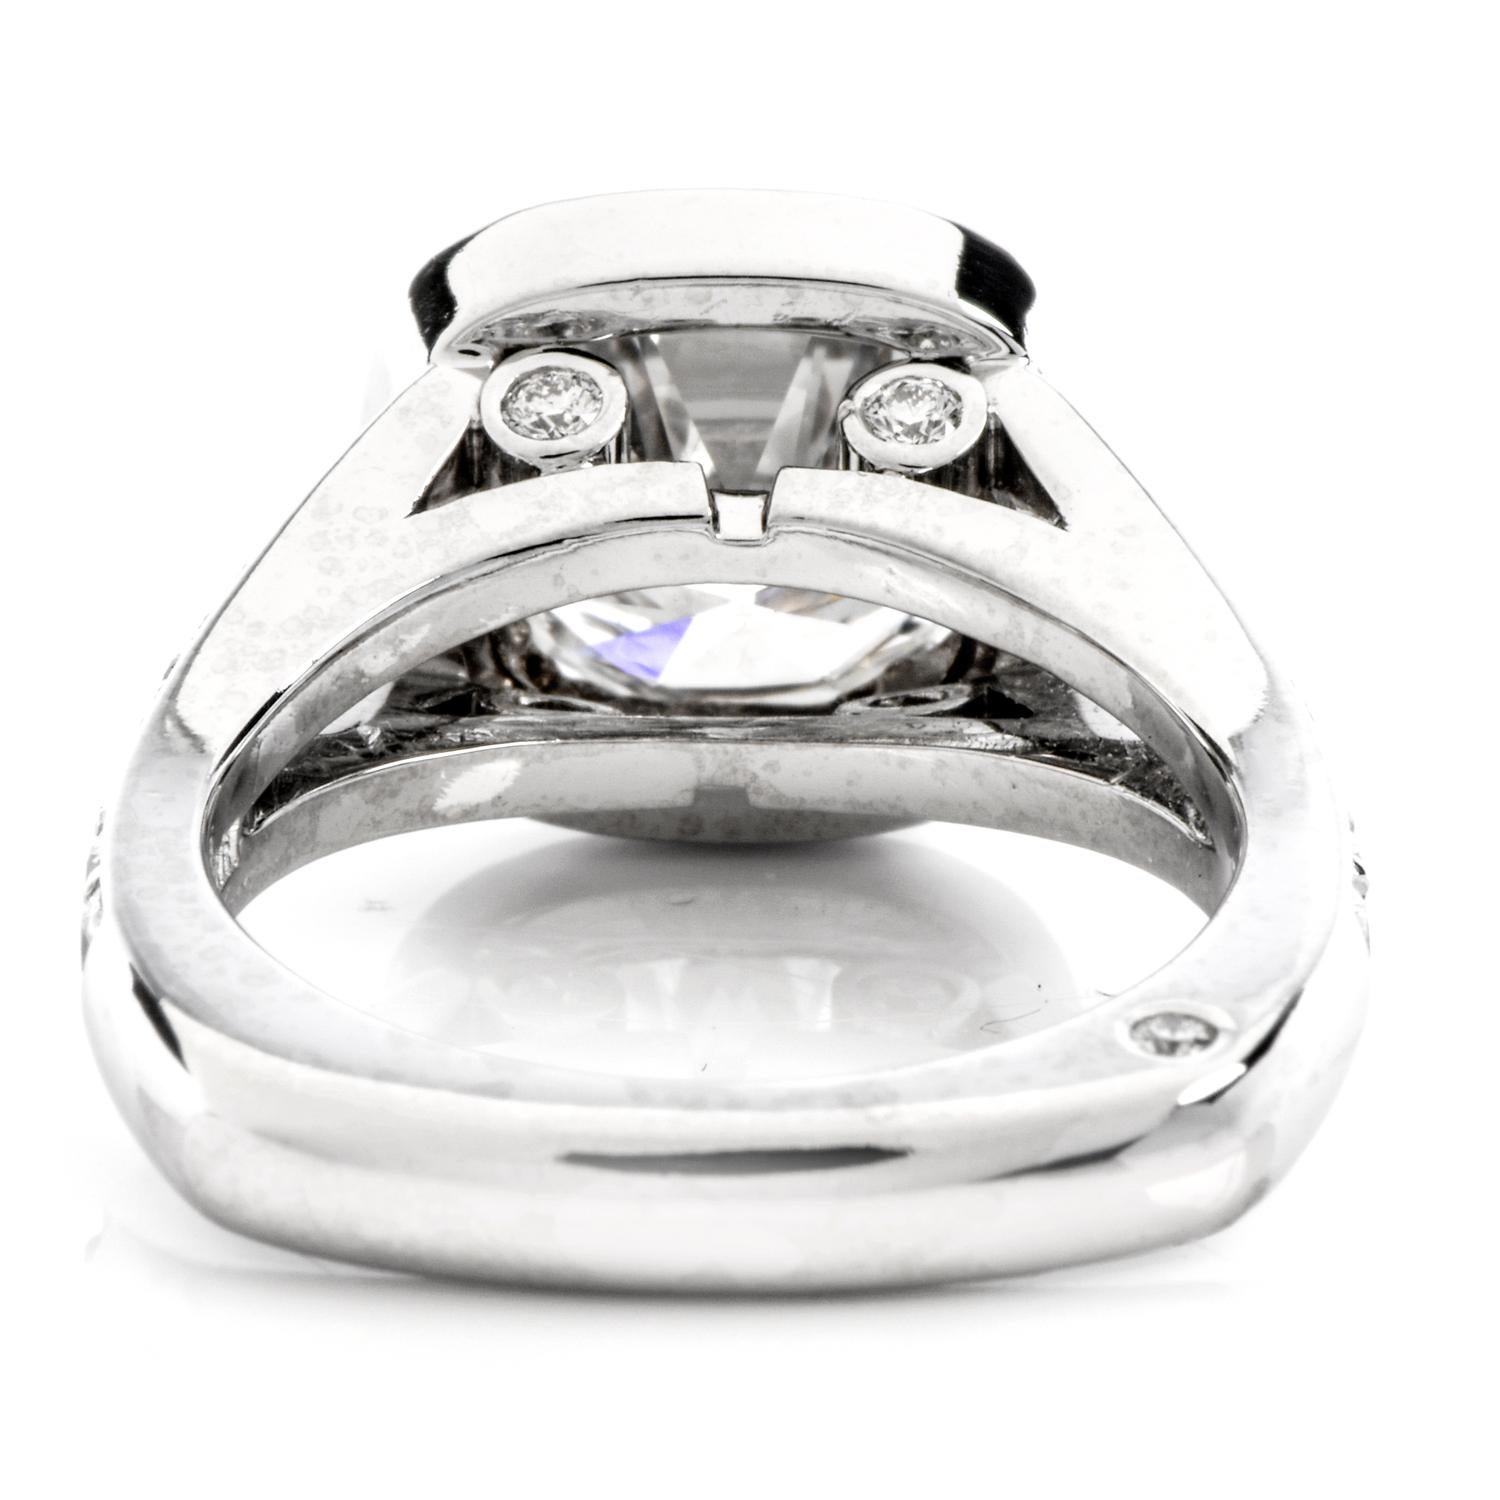 Round Cut GIA 3.89 Carat Round Diamond G-VVS2 Platinum Diamond Engagment Ring